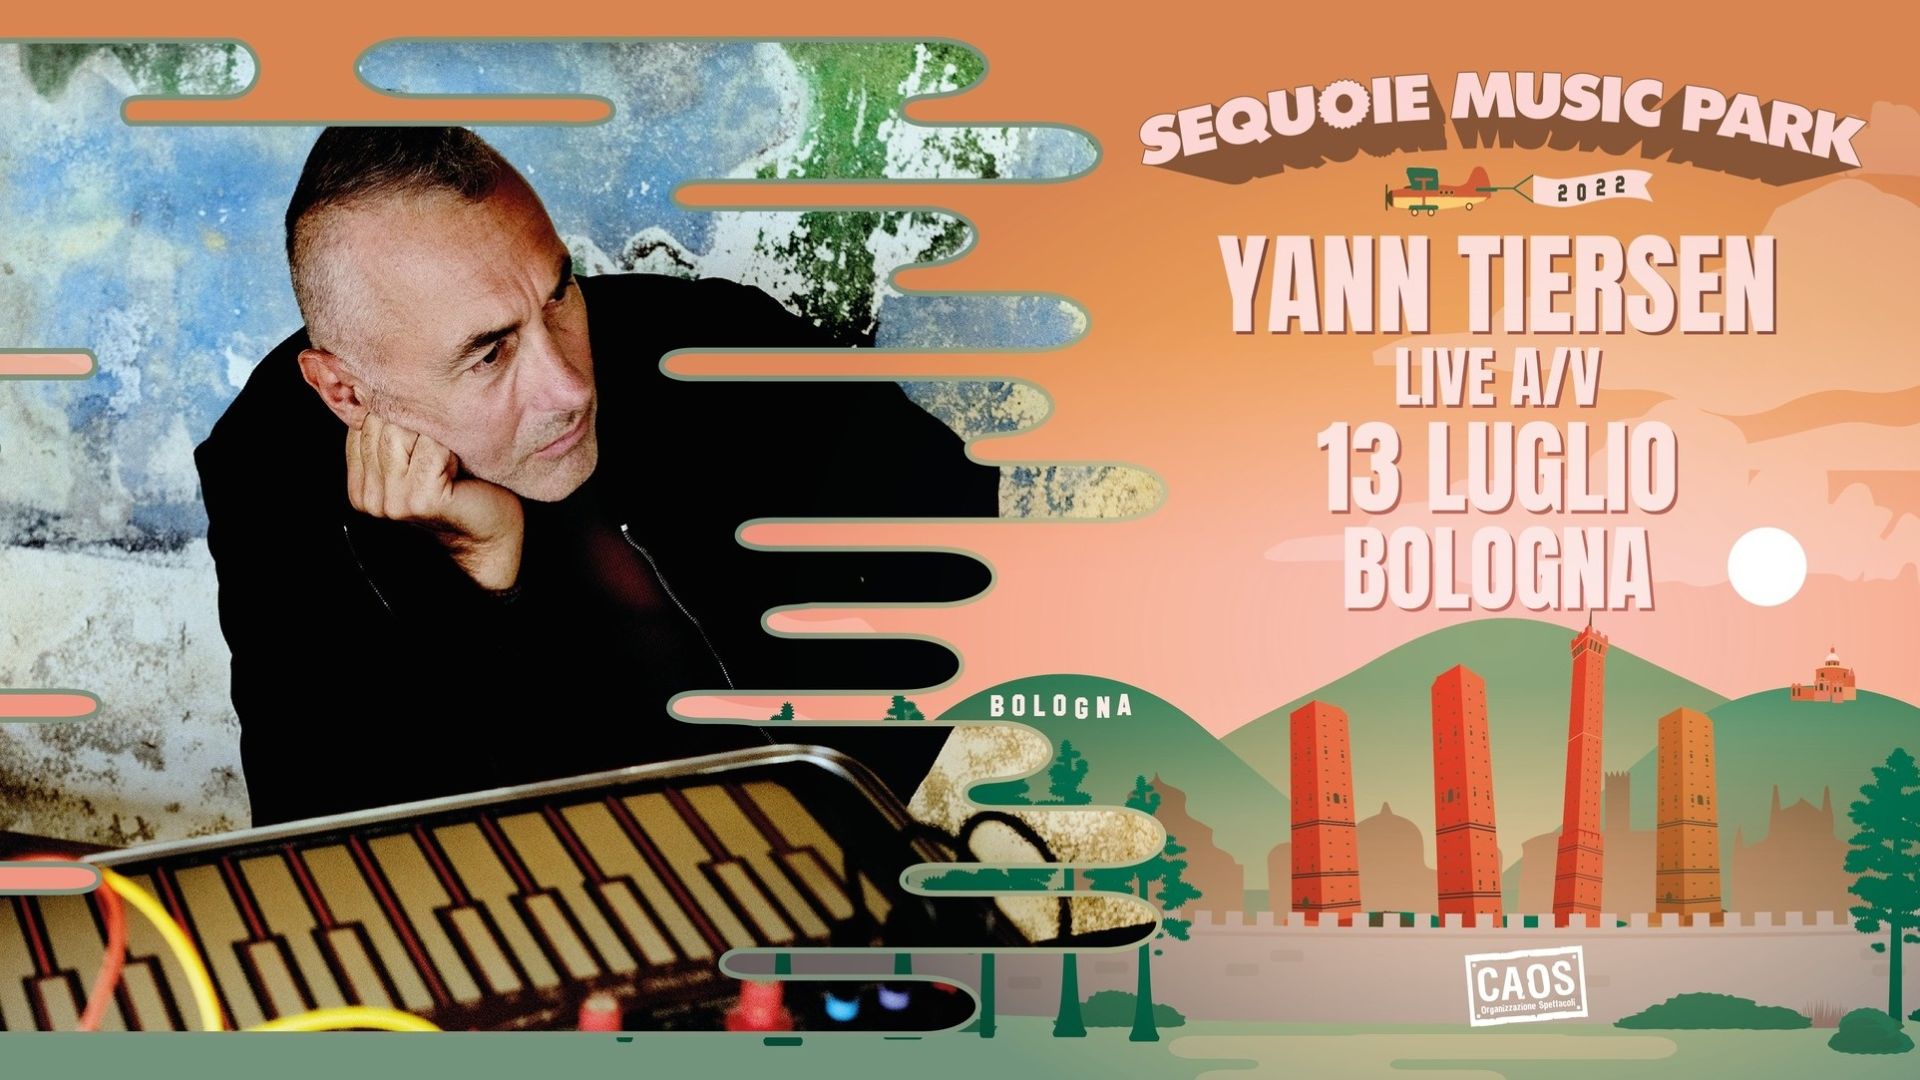 Yann Tiersen Live A/V